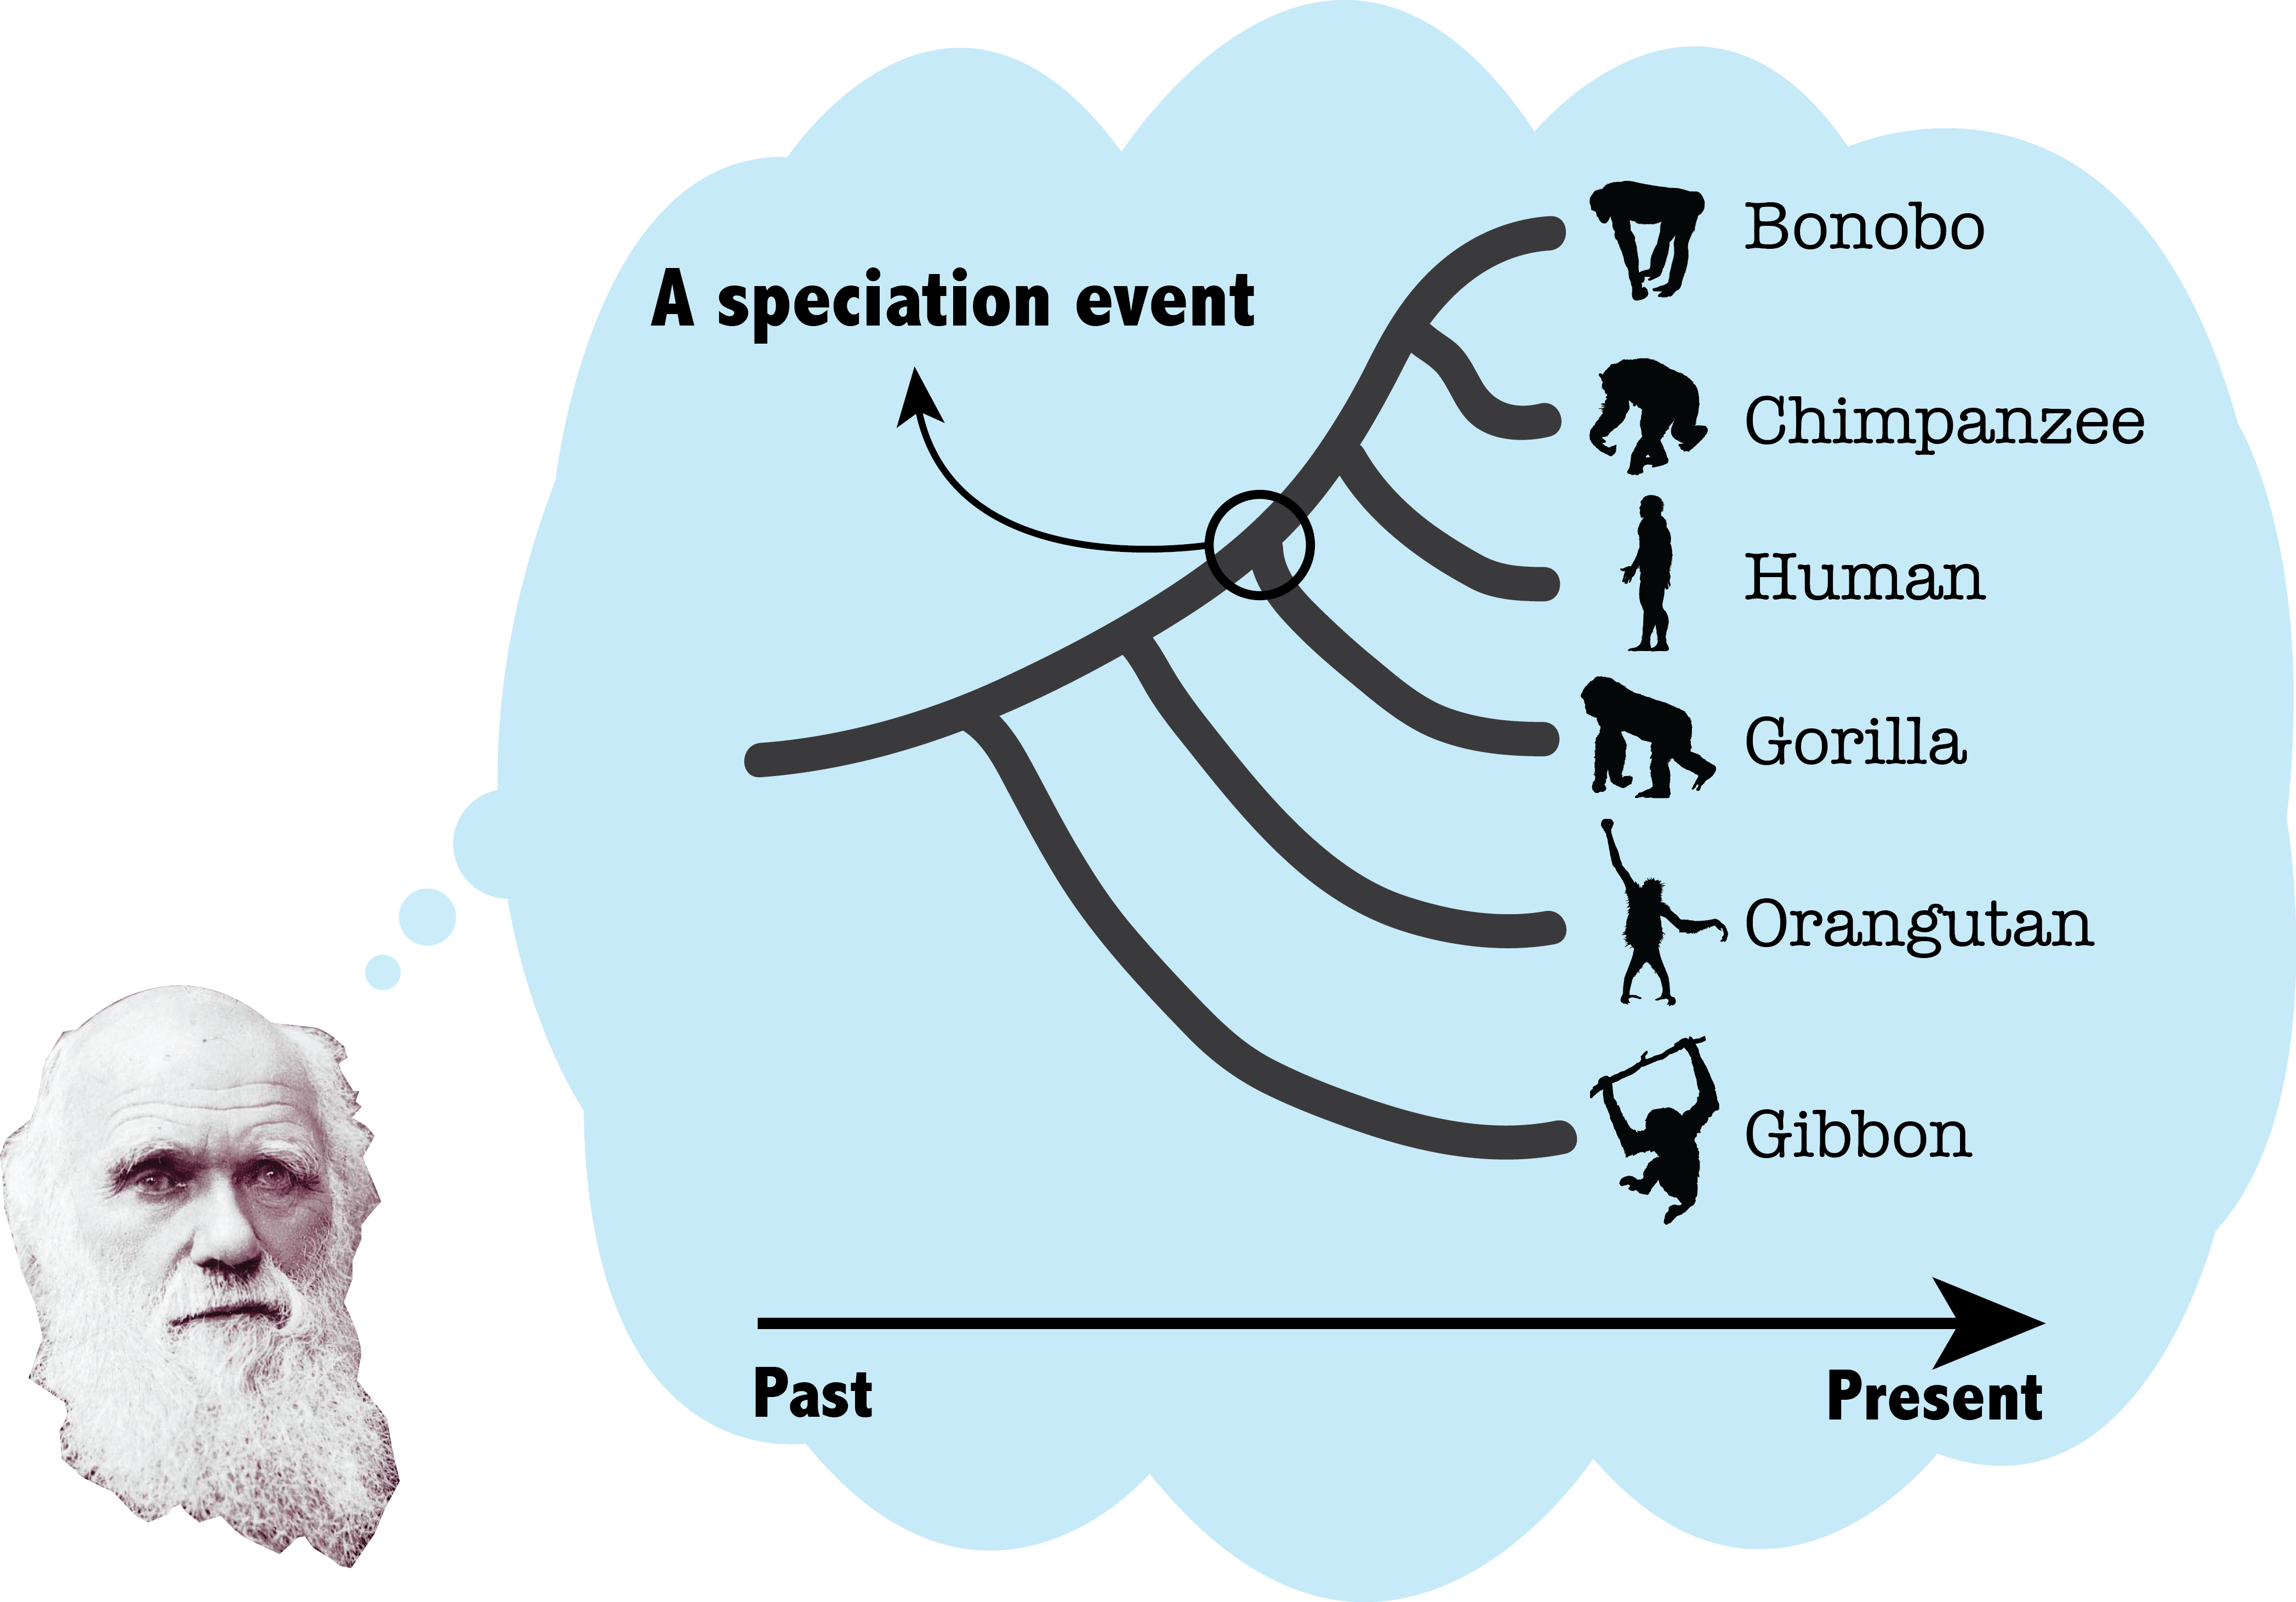 evolutionary chain of man